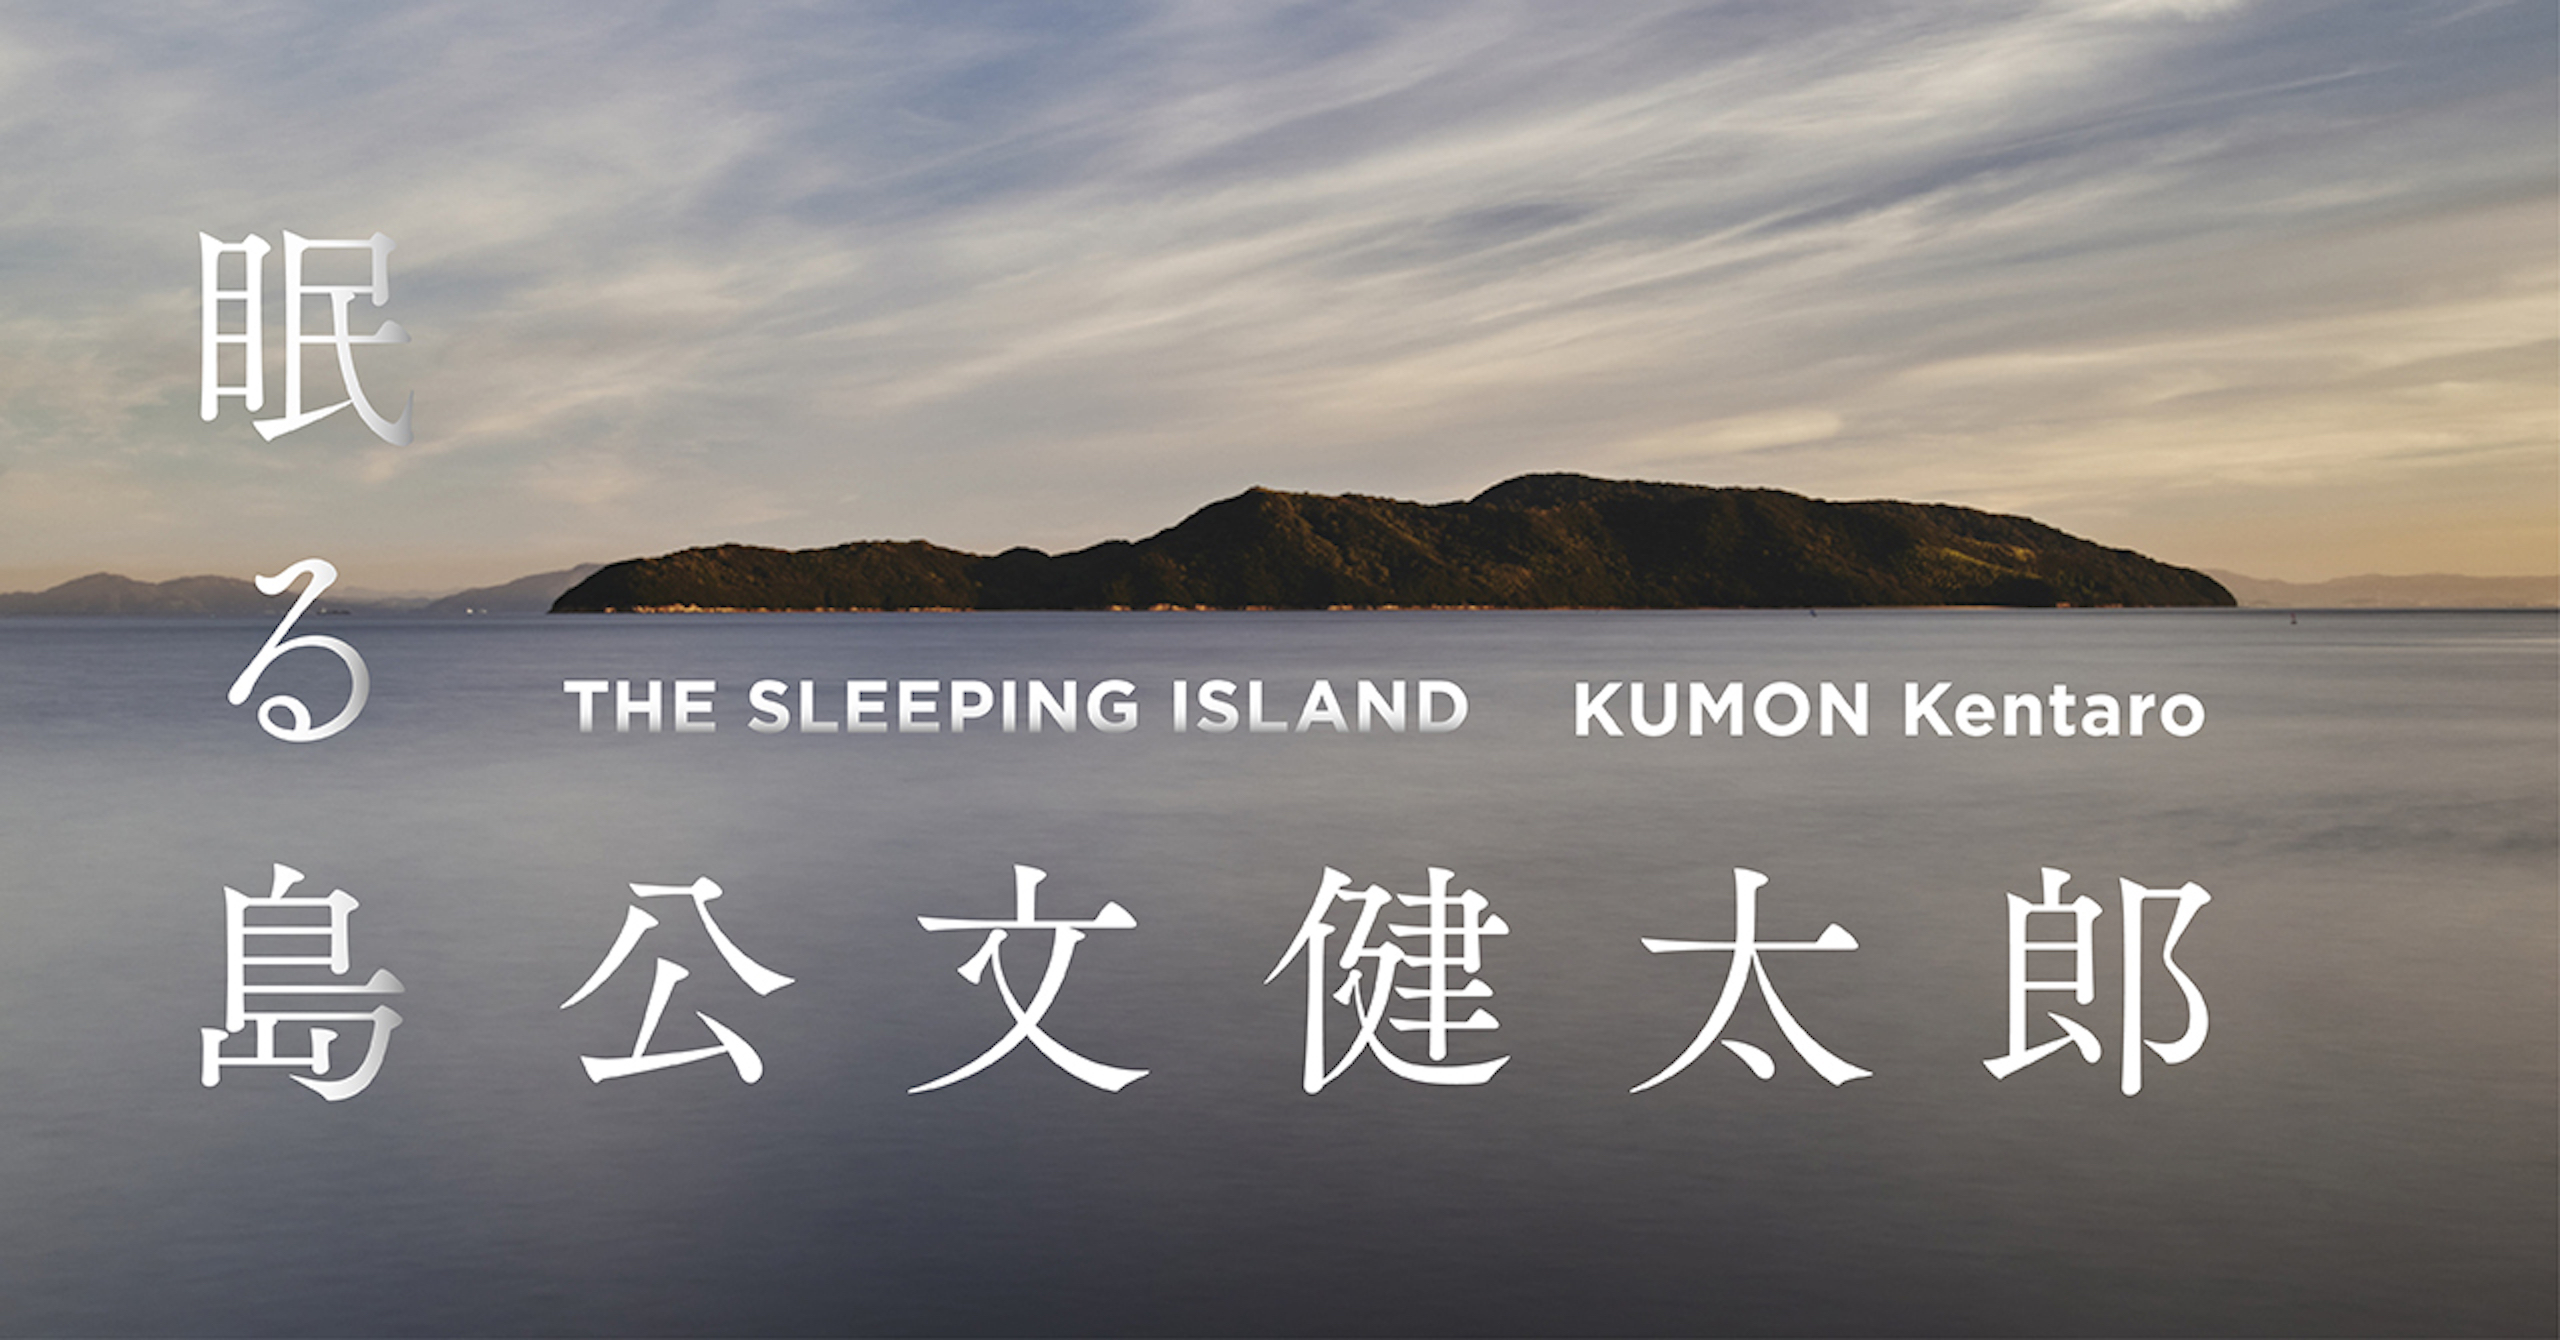 Special exhibition Kentaro Kumon photo exhibition: “The Sleeping Island”